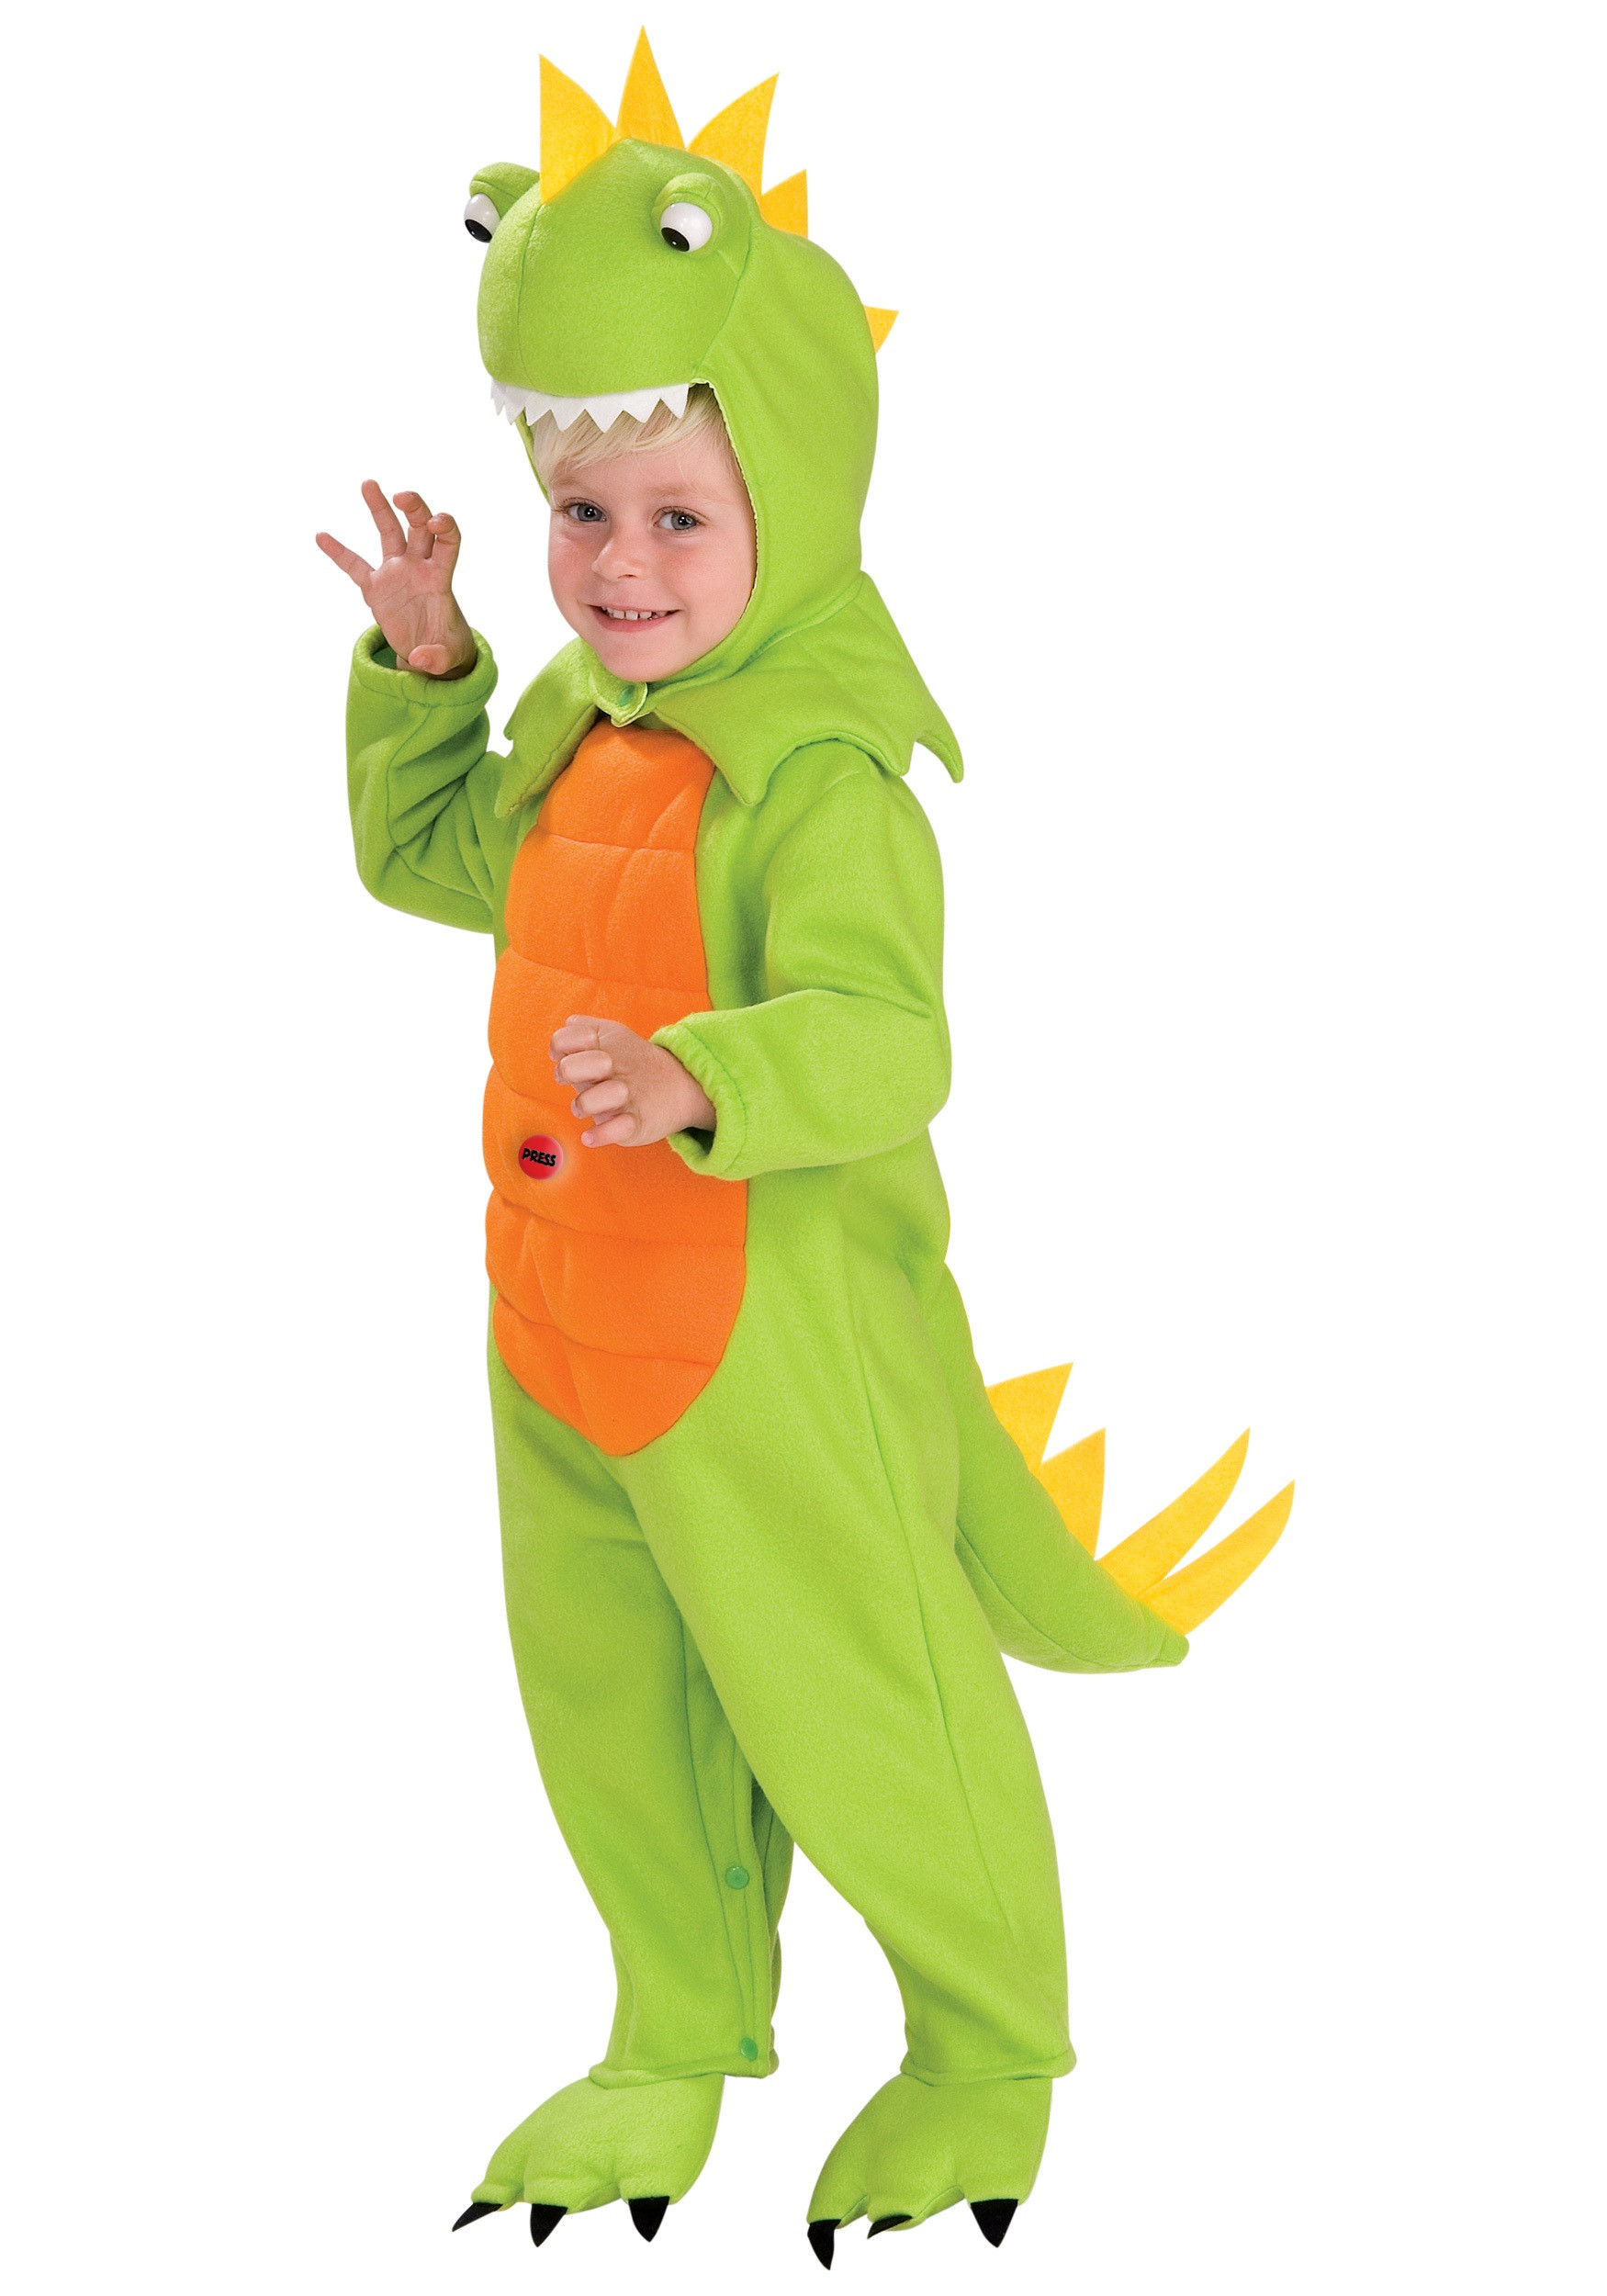 Best ideas about DIY Dinosaur Costume Toddler
. Save or Pin Toddler Dinosaur Costume Now.